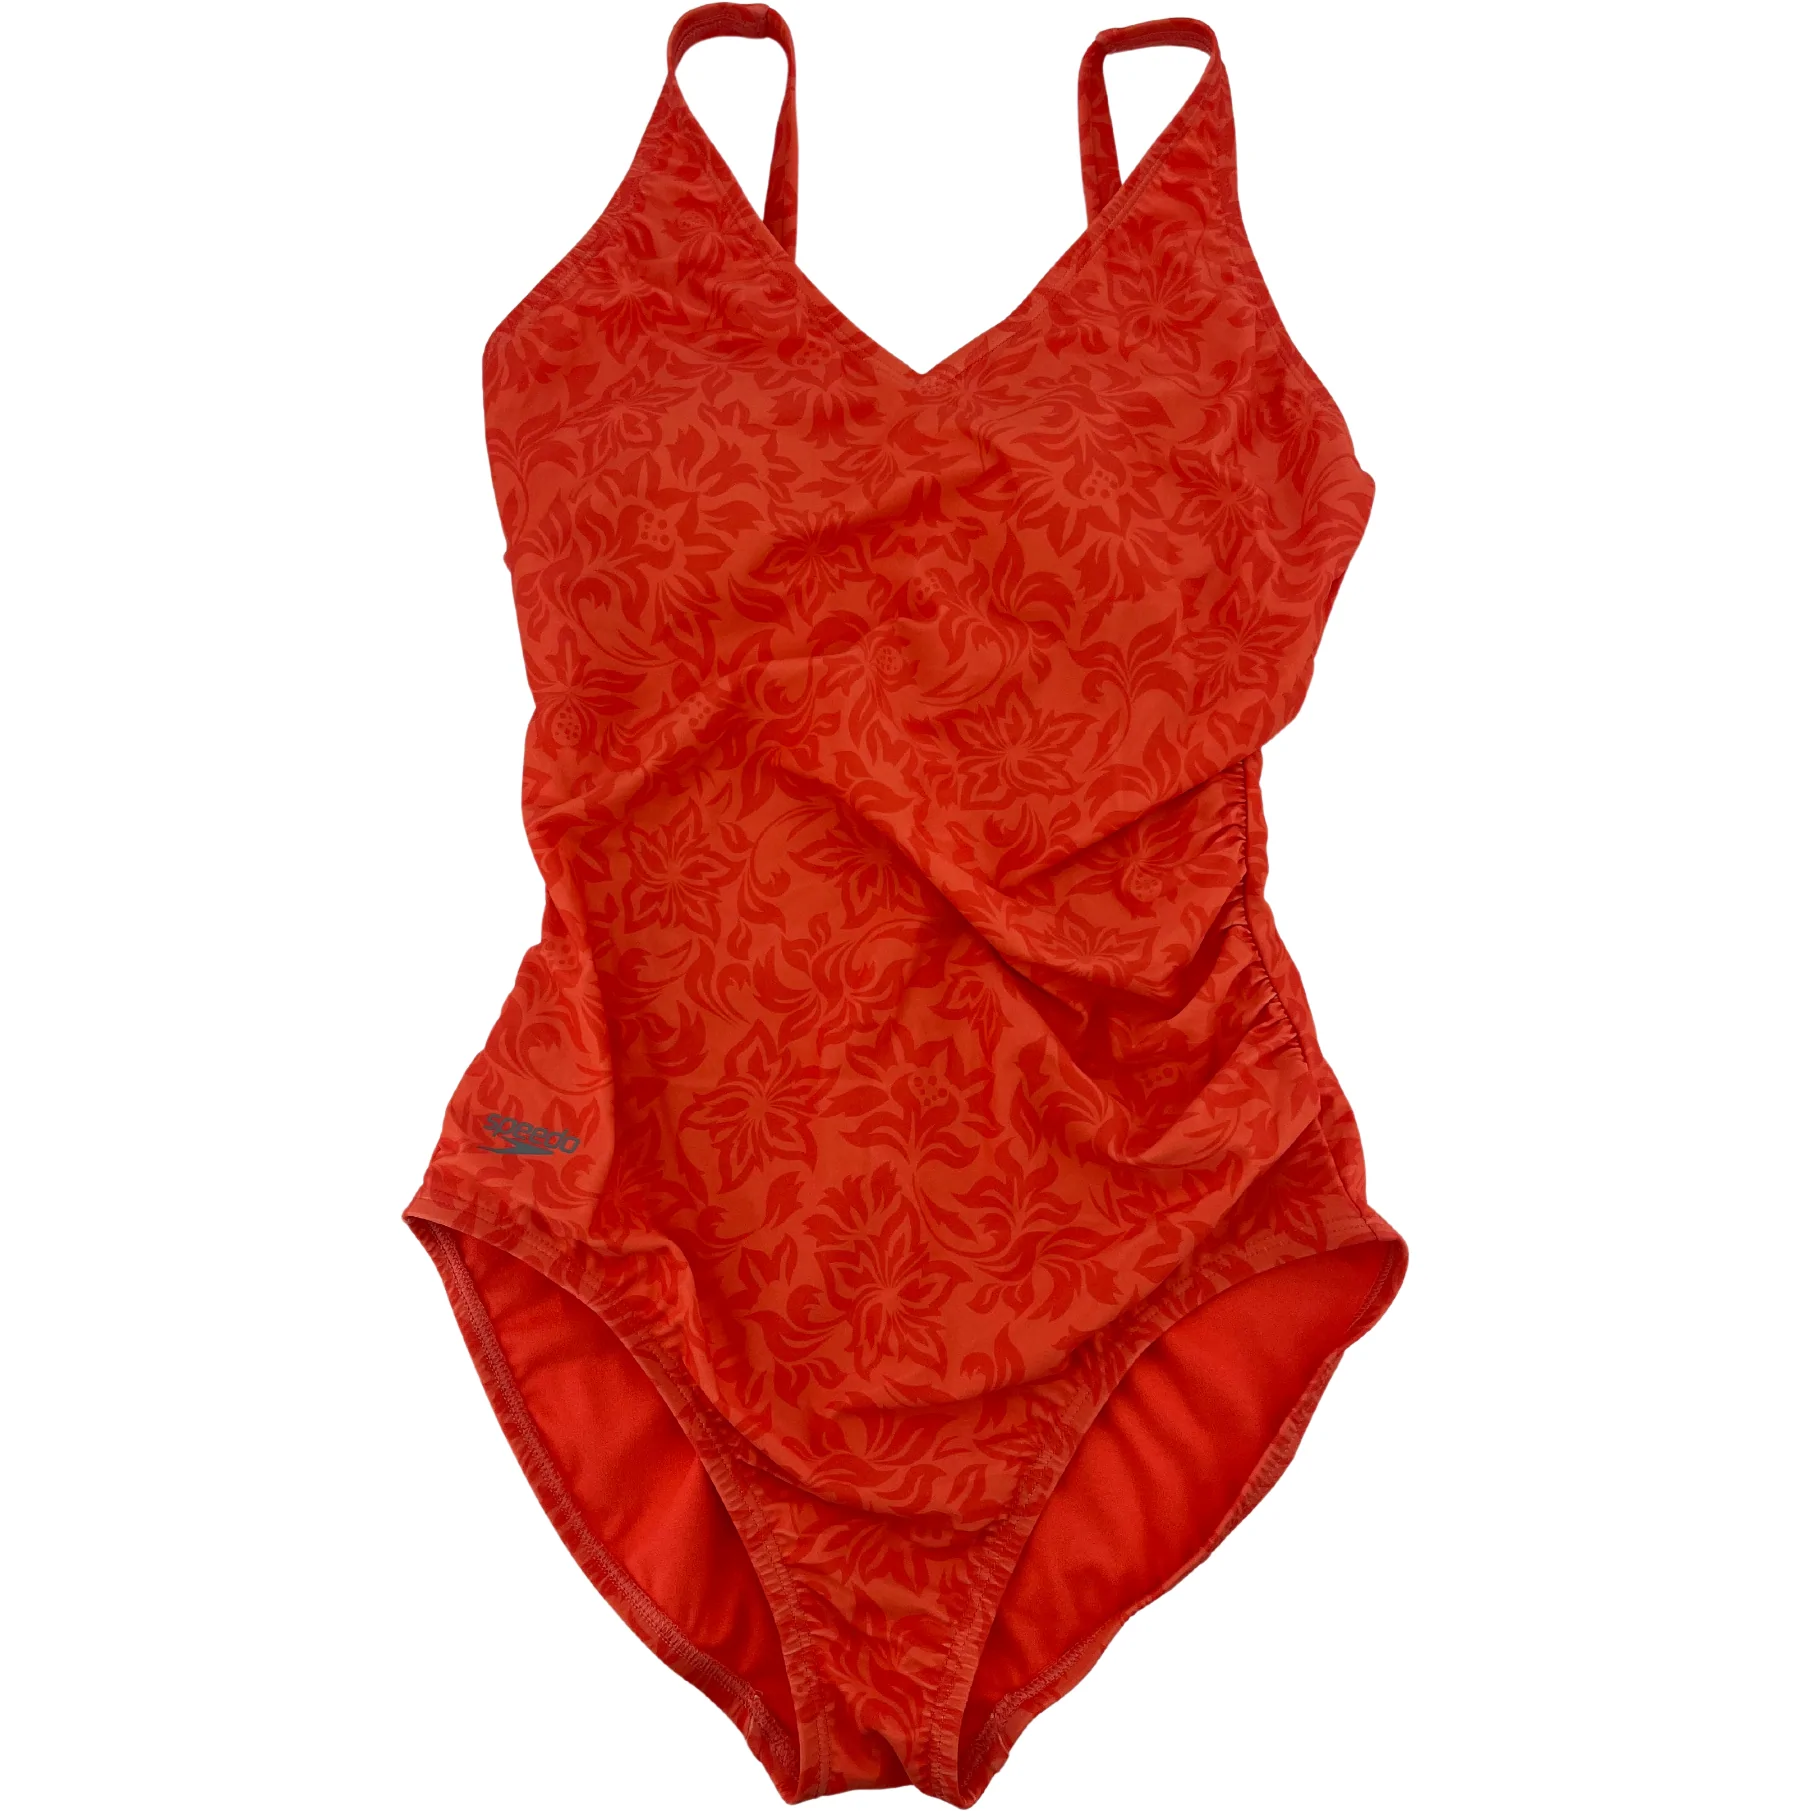 Speedo Women’s Coral Design One Piece Bathing Suit / Size 6